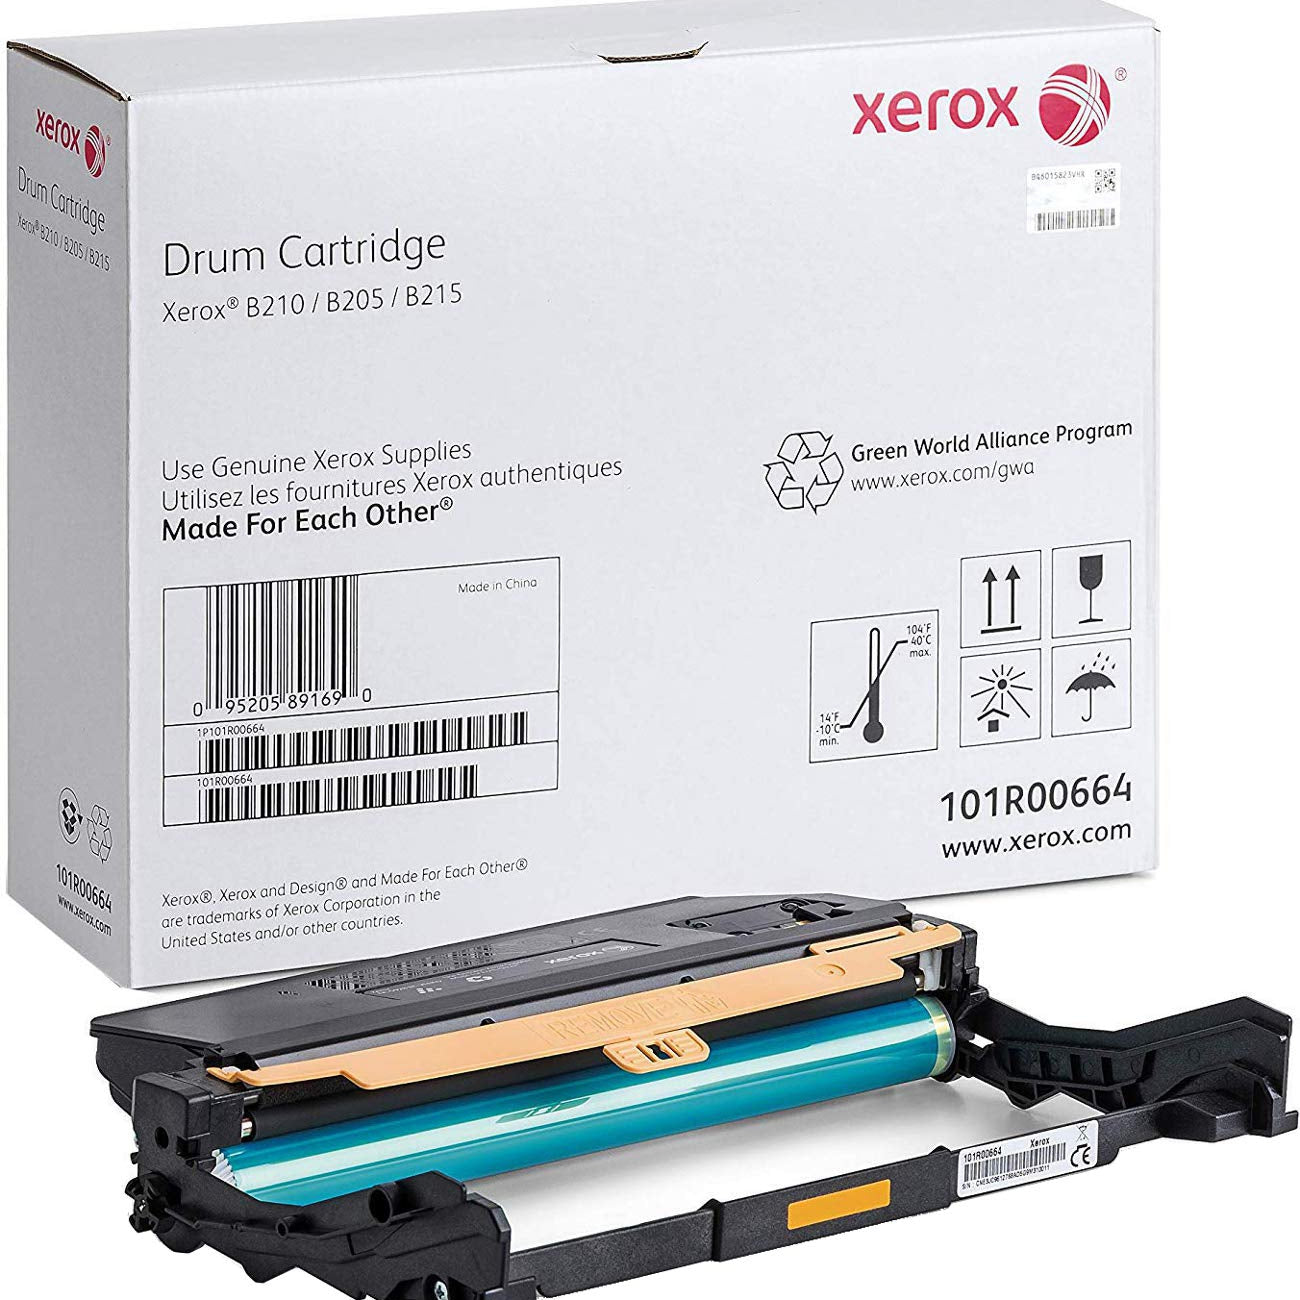 Xerox Toner Cartridge for B210 Printer B205 and B215  Mutifunction Printer